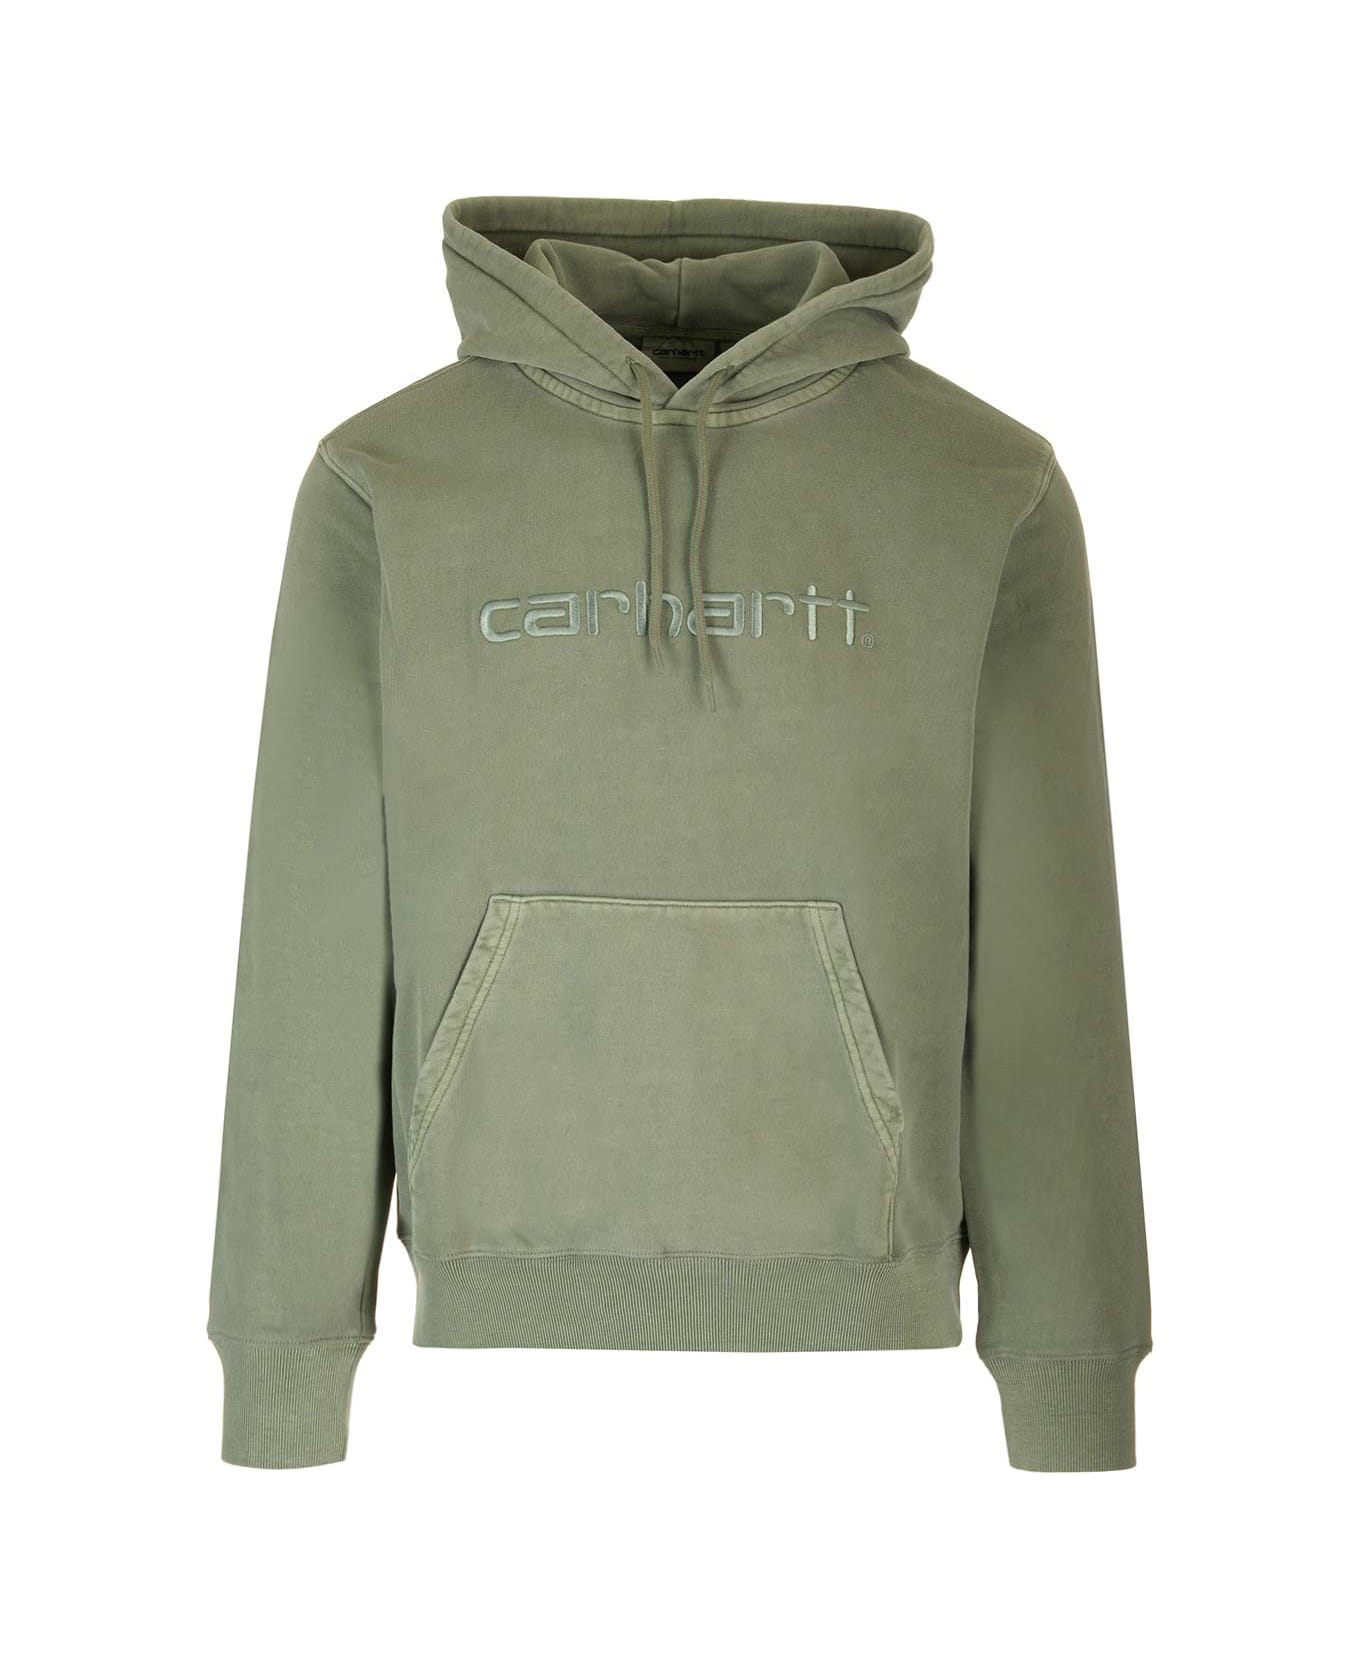 Carhartt Cotton Hooded Sweatshirt - Military フリース